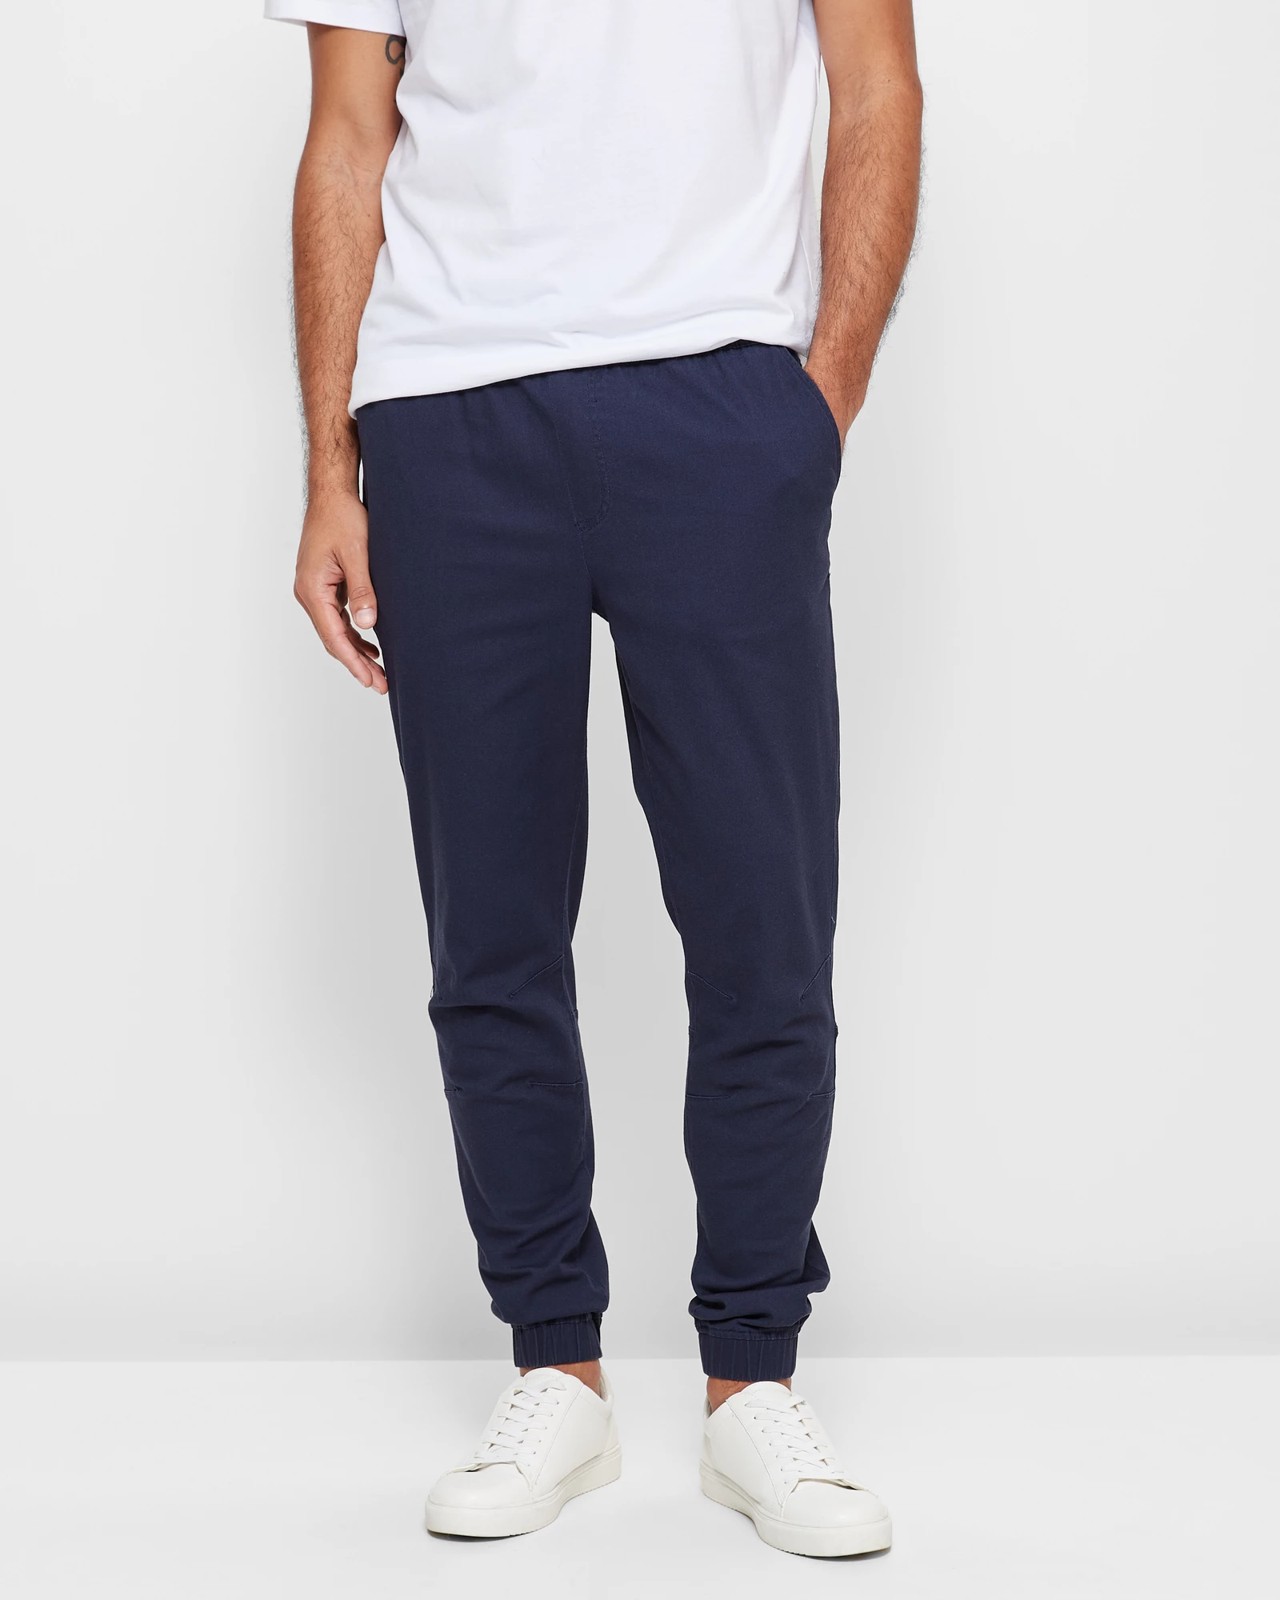 Woven Jogger Pants - Navy Blue | Target Australia